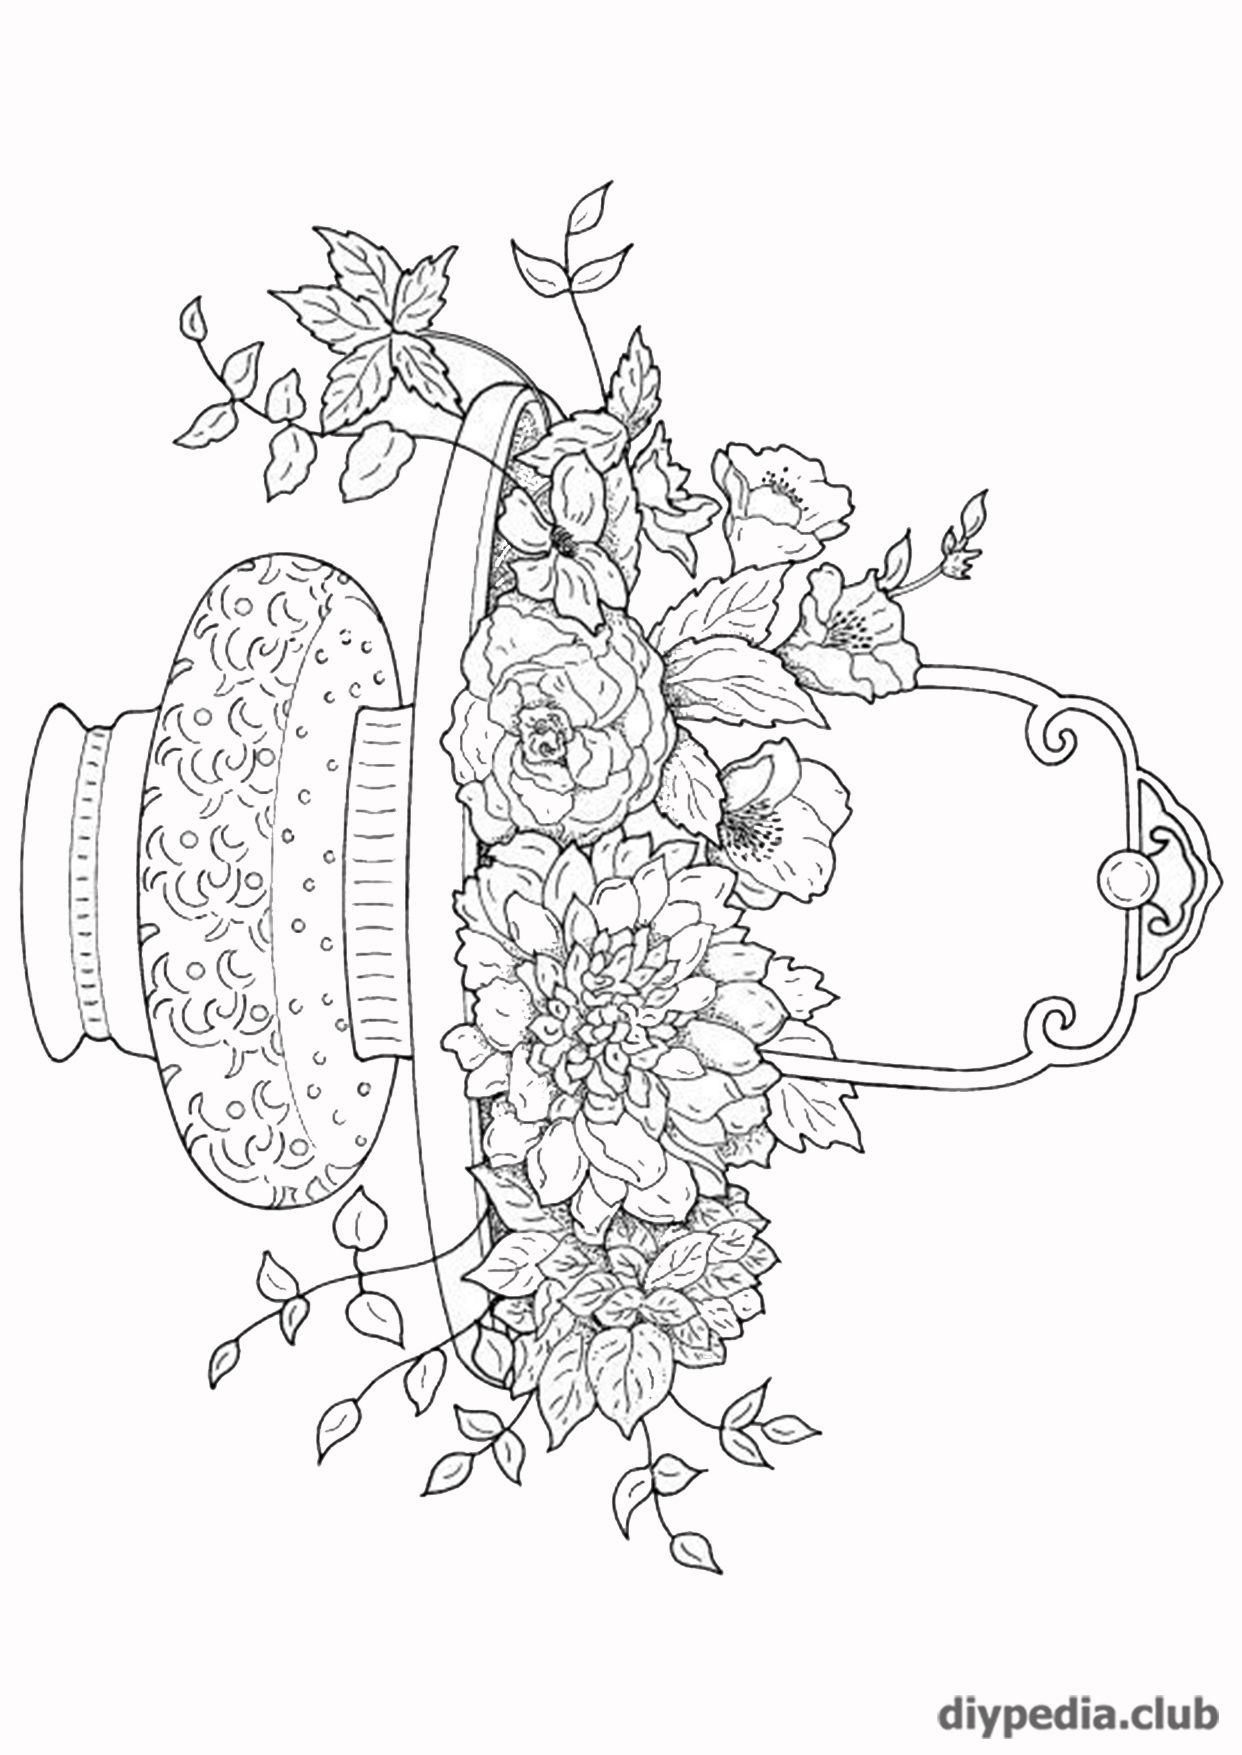 Картинка-раскраска "цветы" на А 4